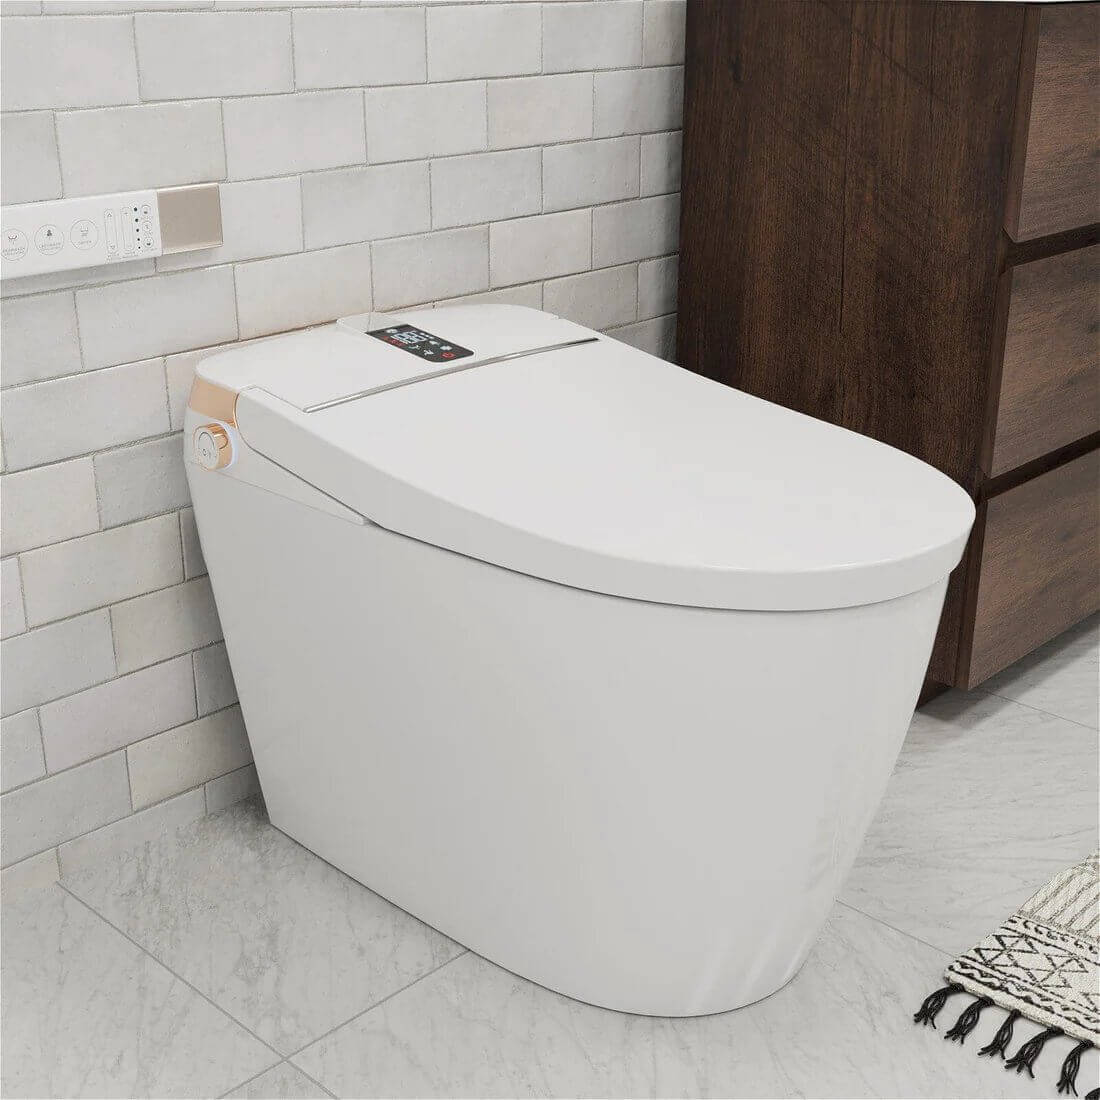 White one-piece floor-Mounted toilet